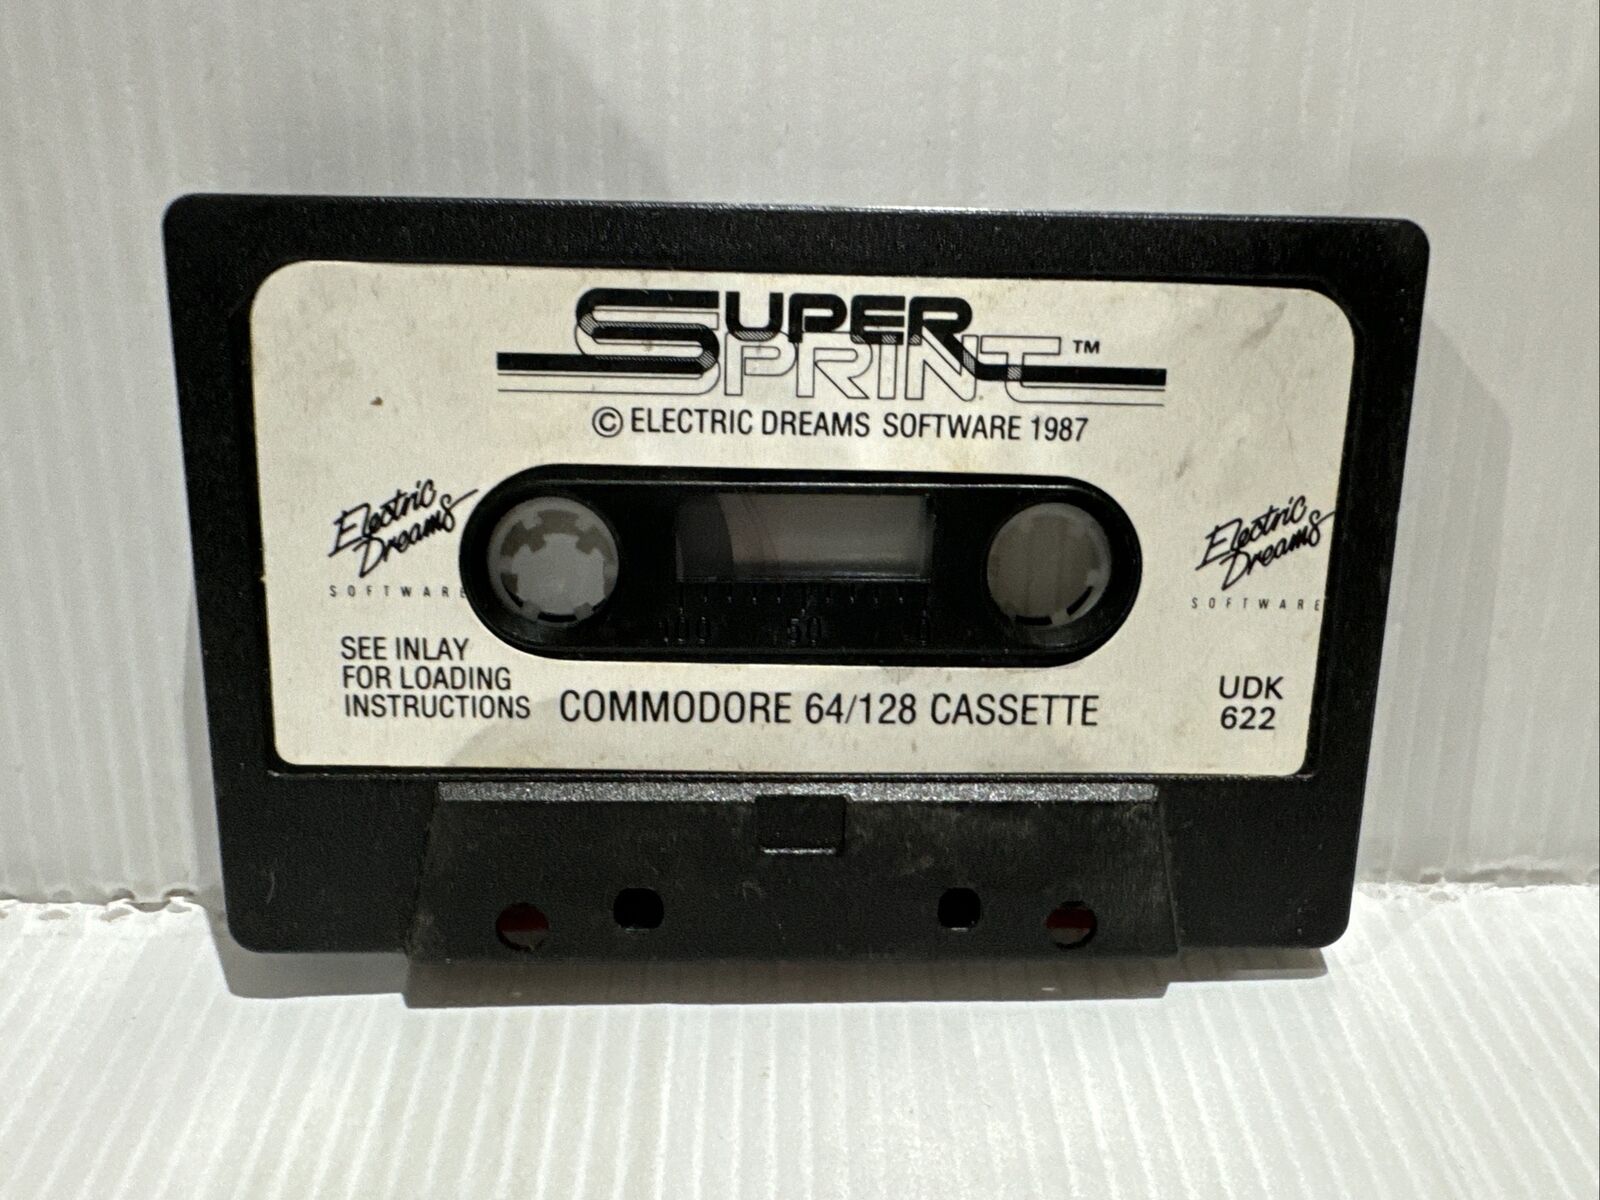 Super Sprint Commodore 64 / 128 C64 Electric Dreams Software 1987 Cassette